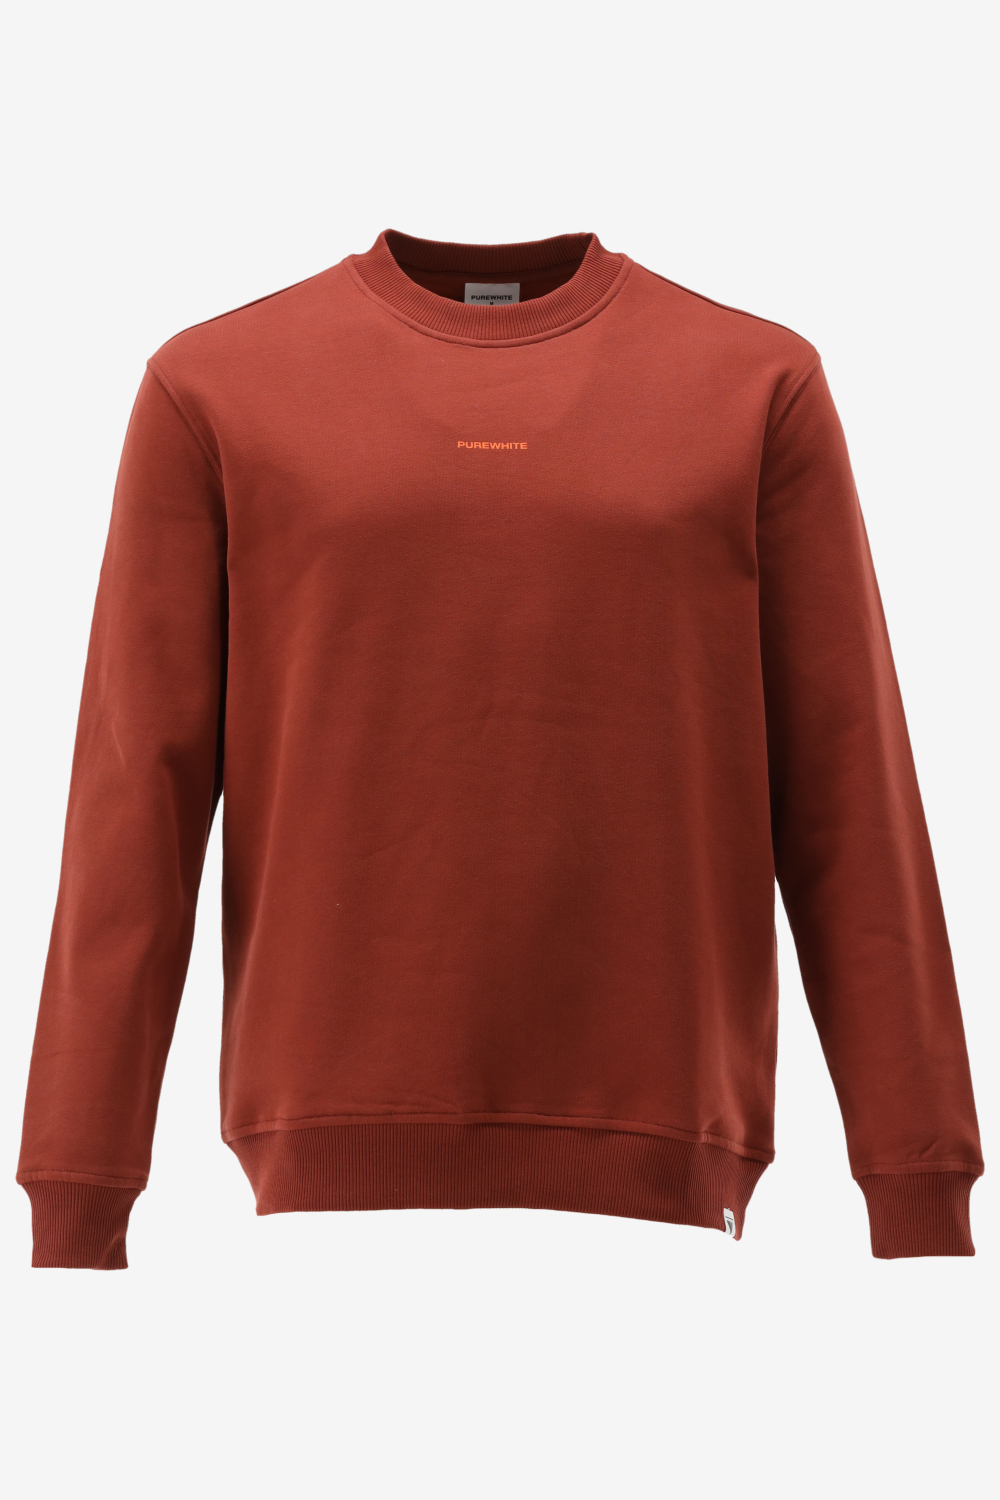 Purewhite - Heren Regular Fit Sweater - Oranje - Maat XXL